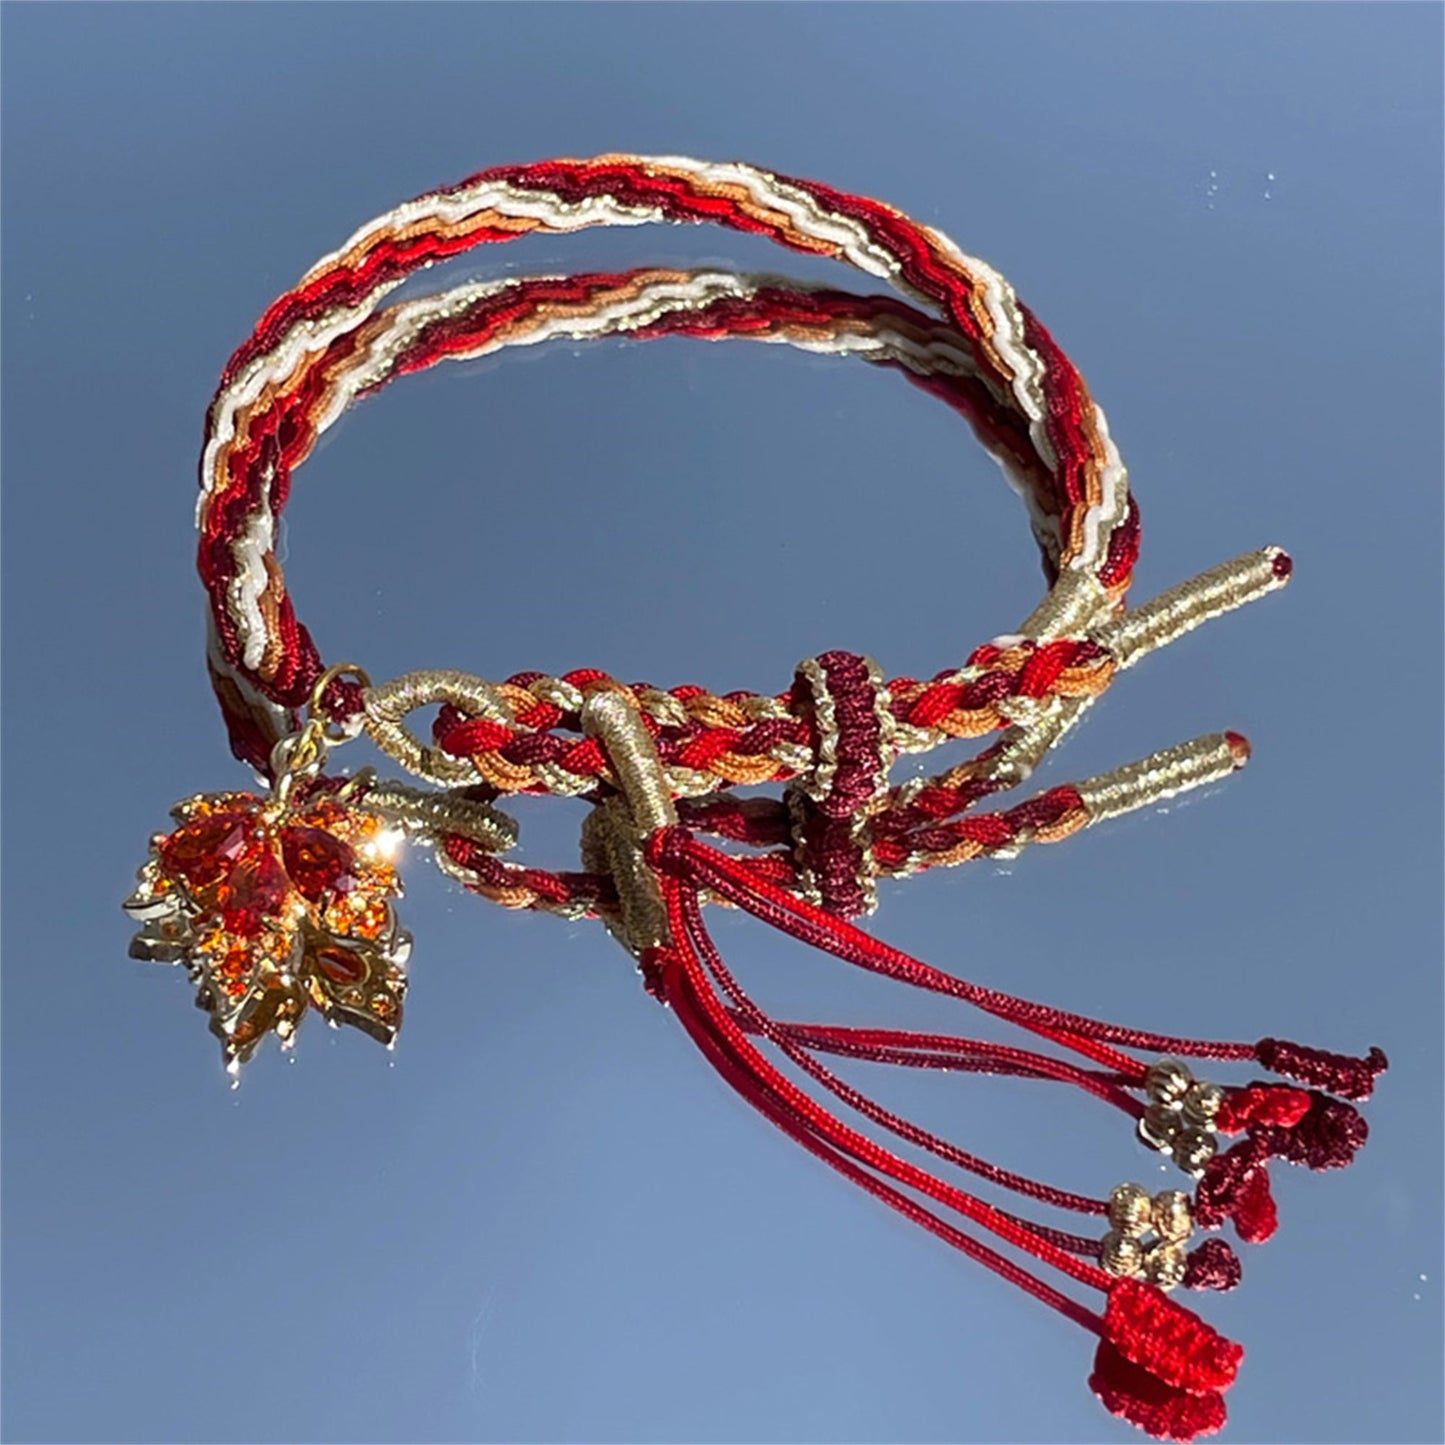 Genshin Raiden Shogun Bracelet Hand-Woven Bracelet